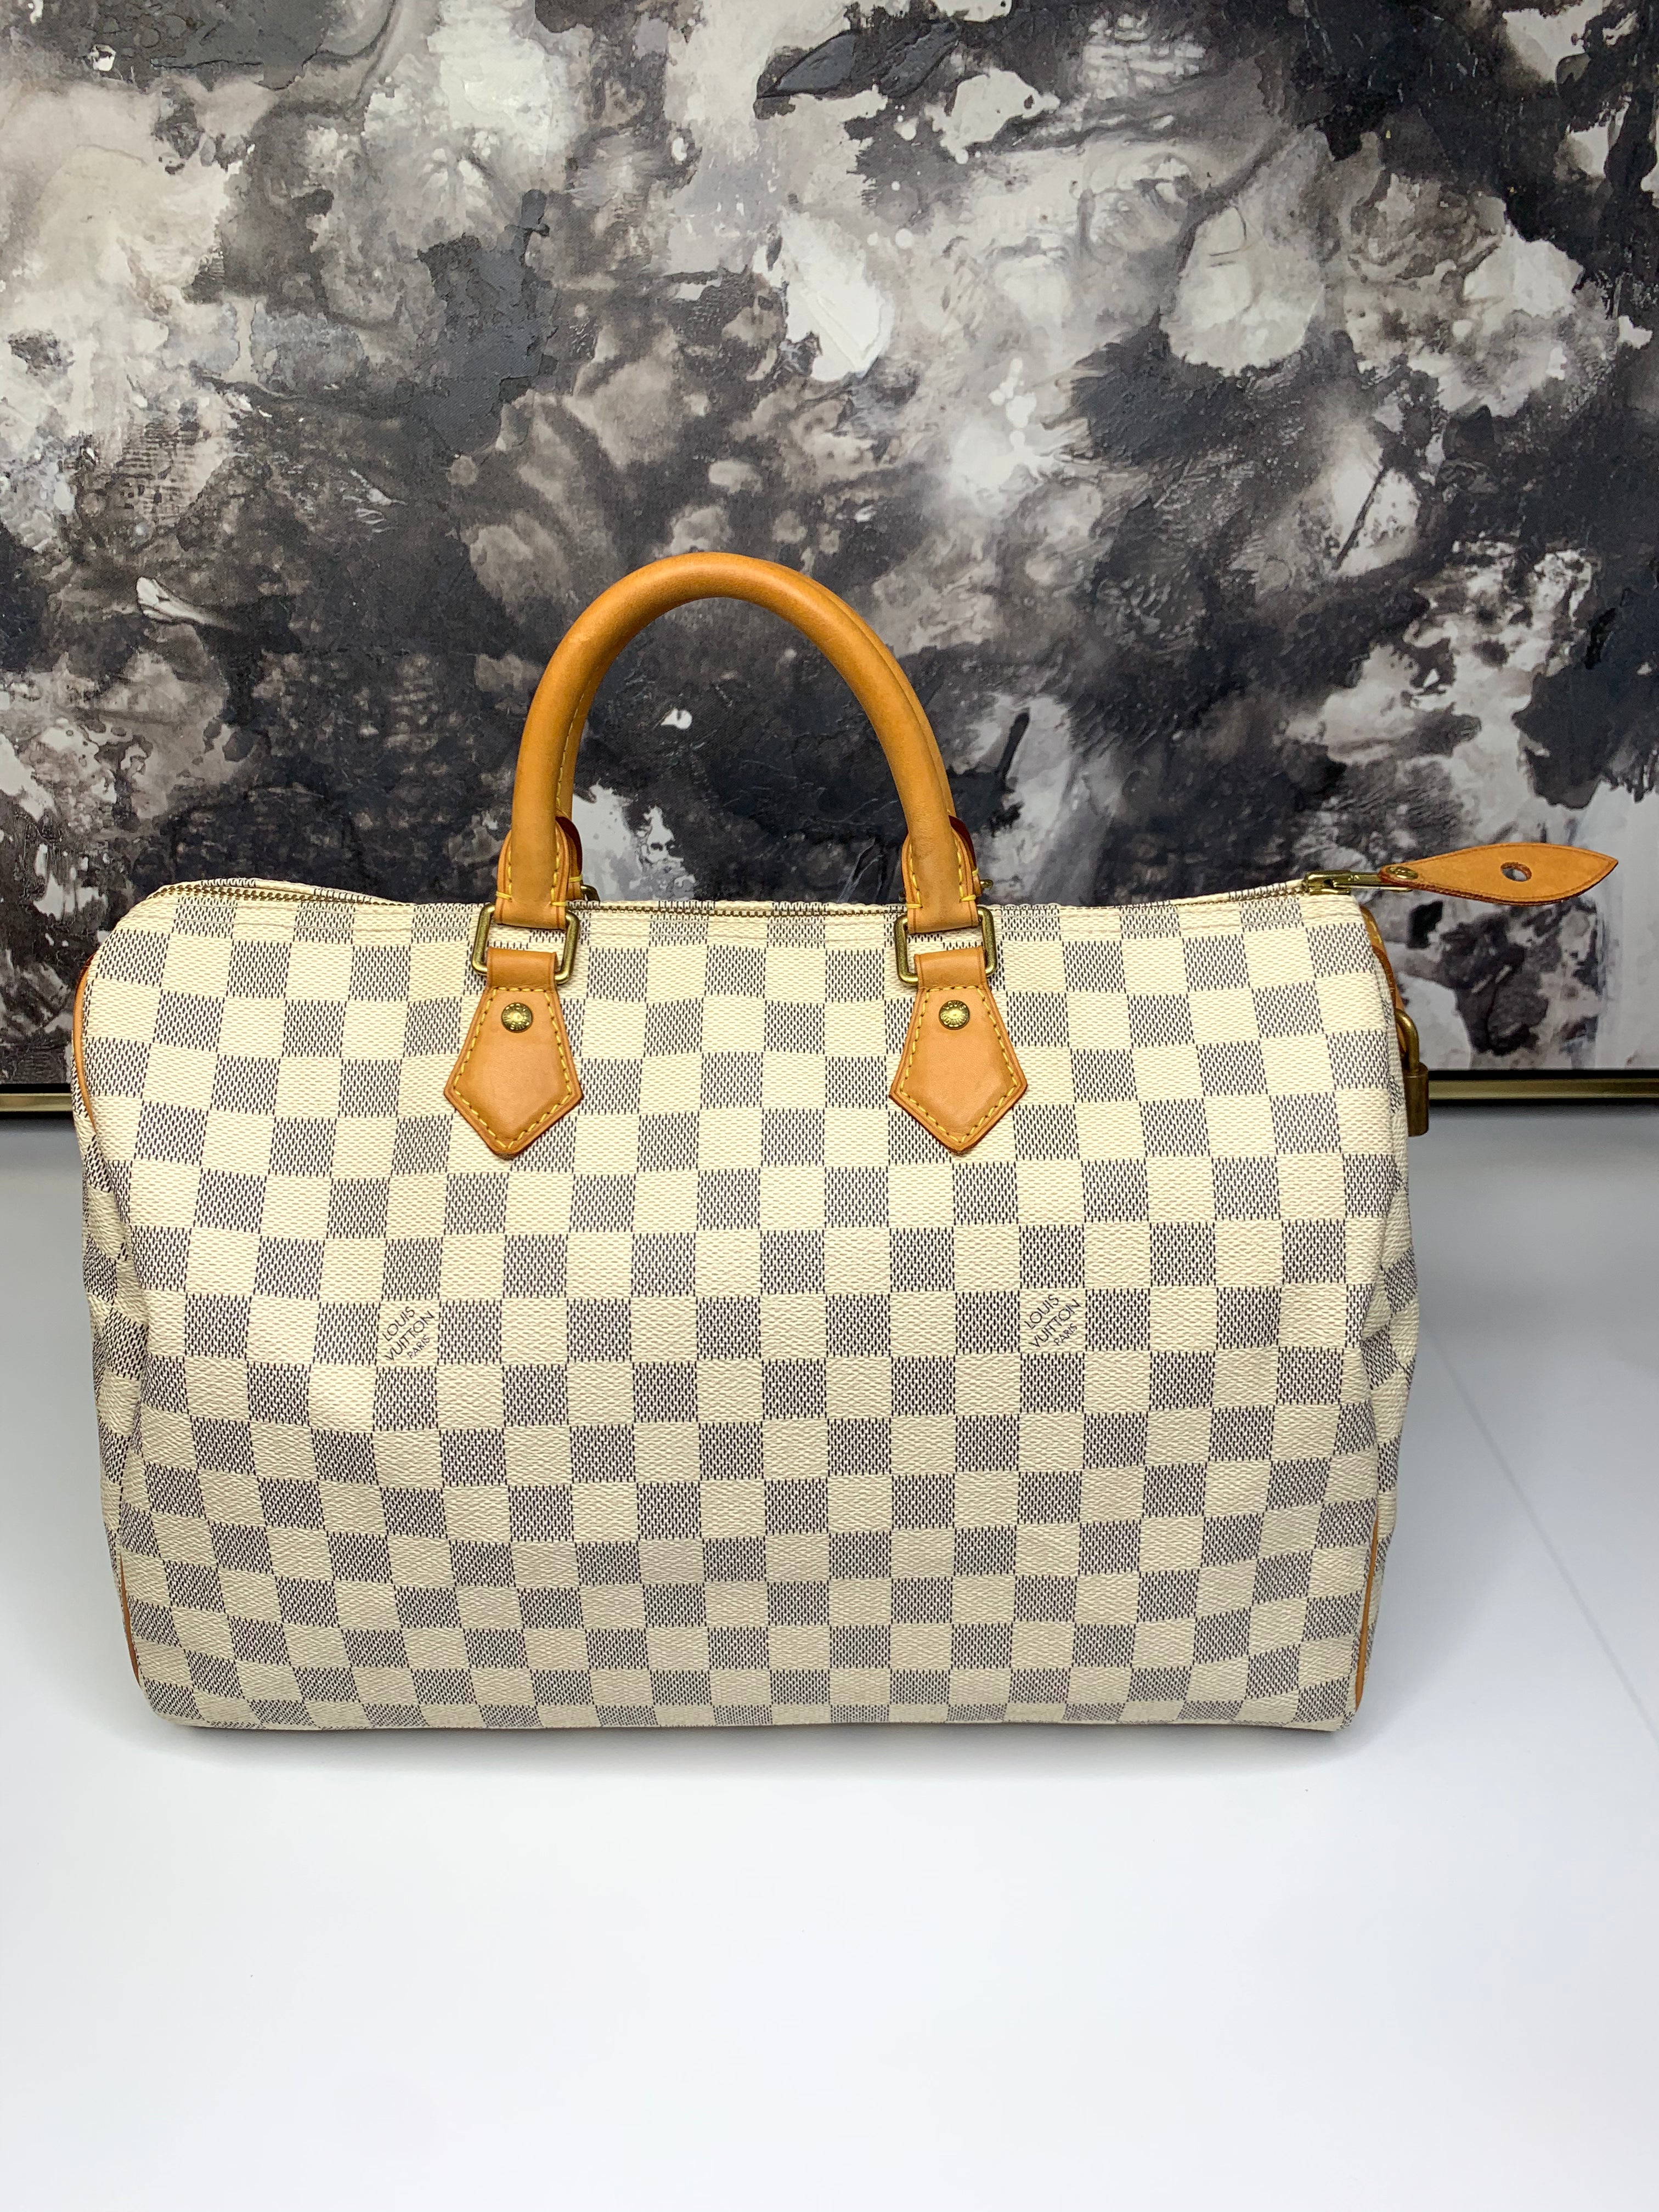 Louis Vuitton Speedy 35 handbag in brown damier canvas and brown